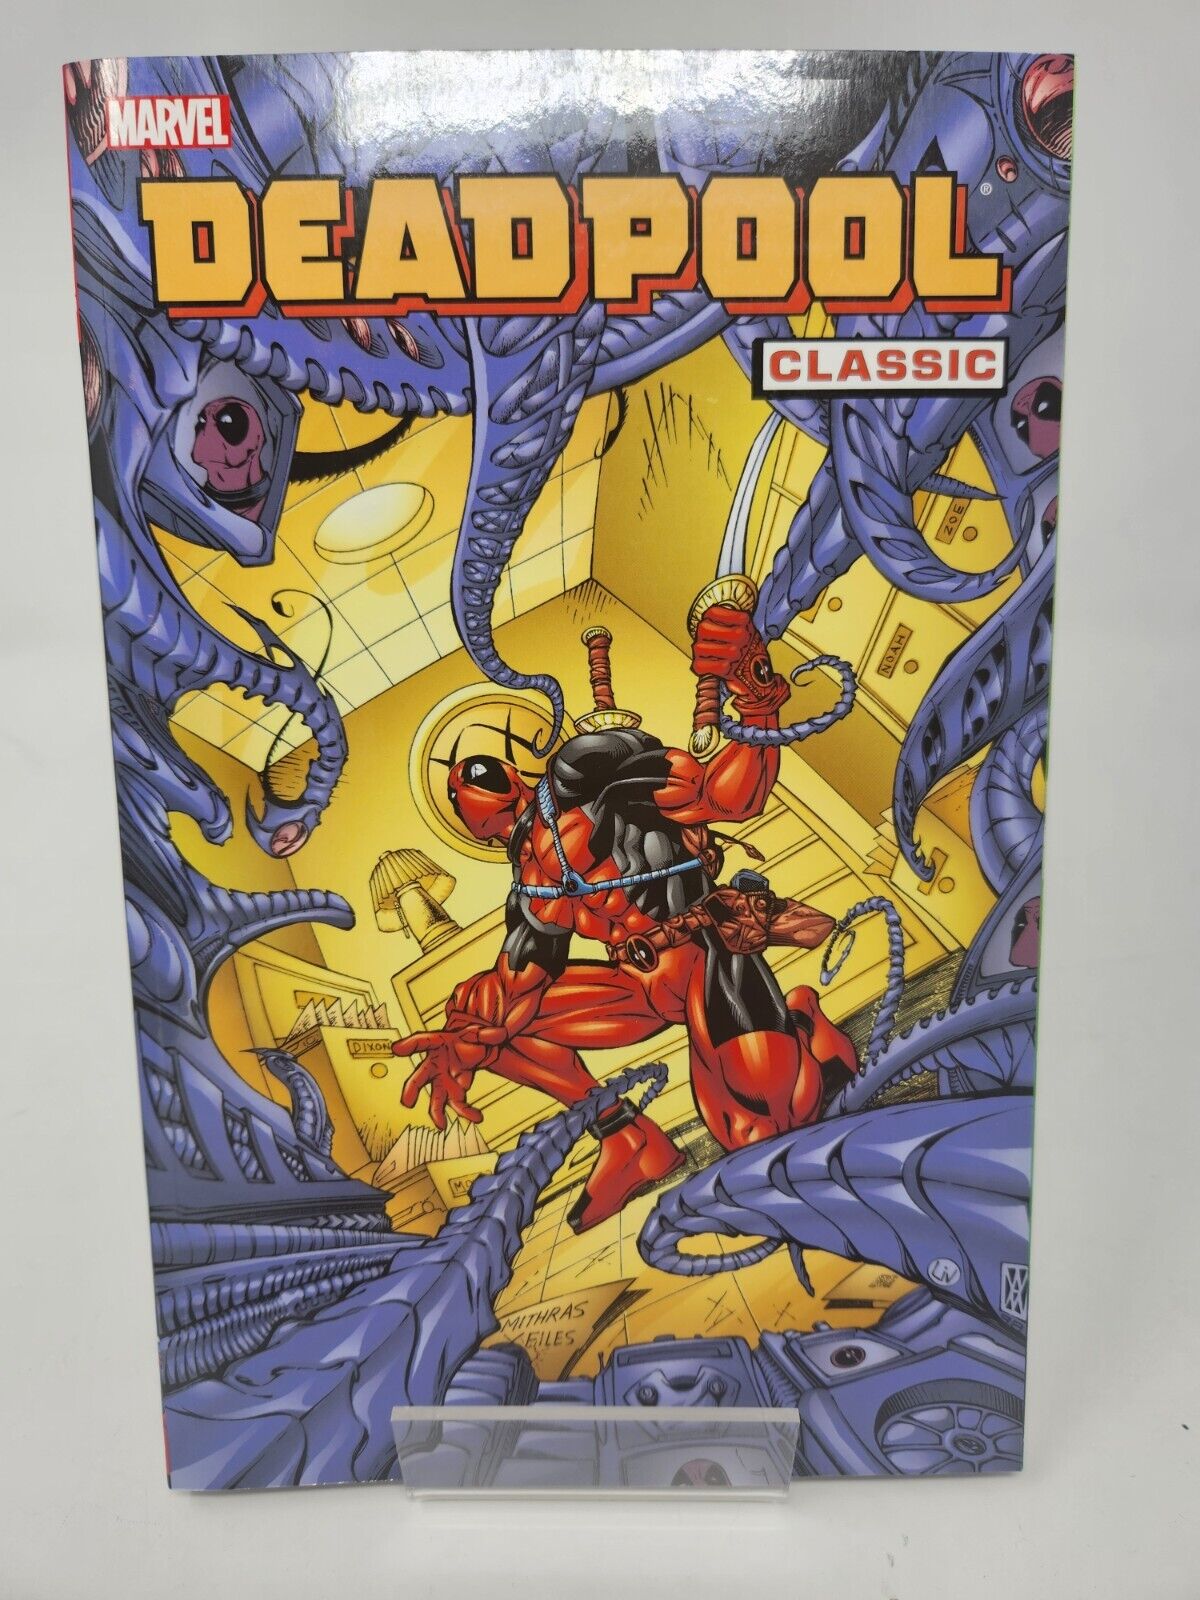 Deadpool Classic Vol 4 - Marvel Comics Trade Paperback By Kelly, Joe - Brand New